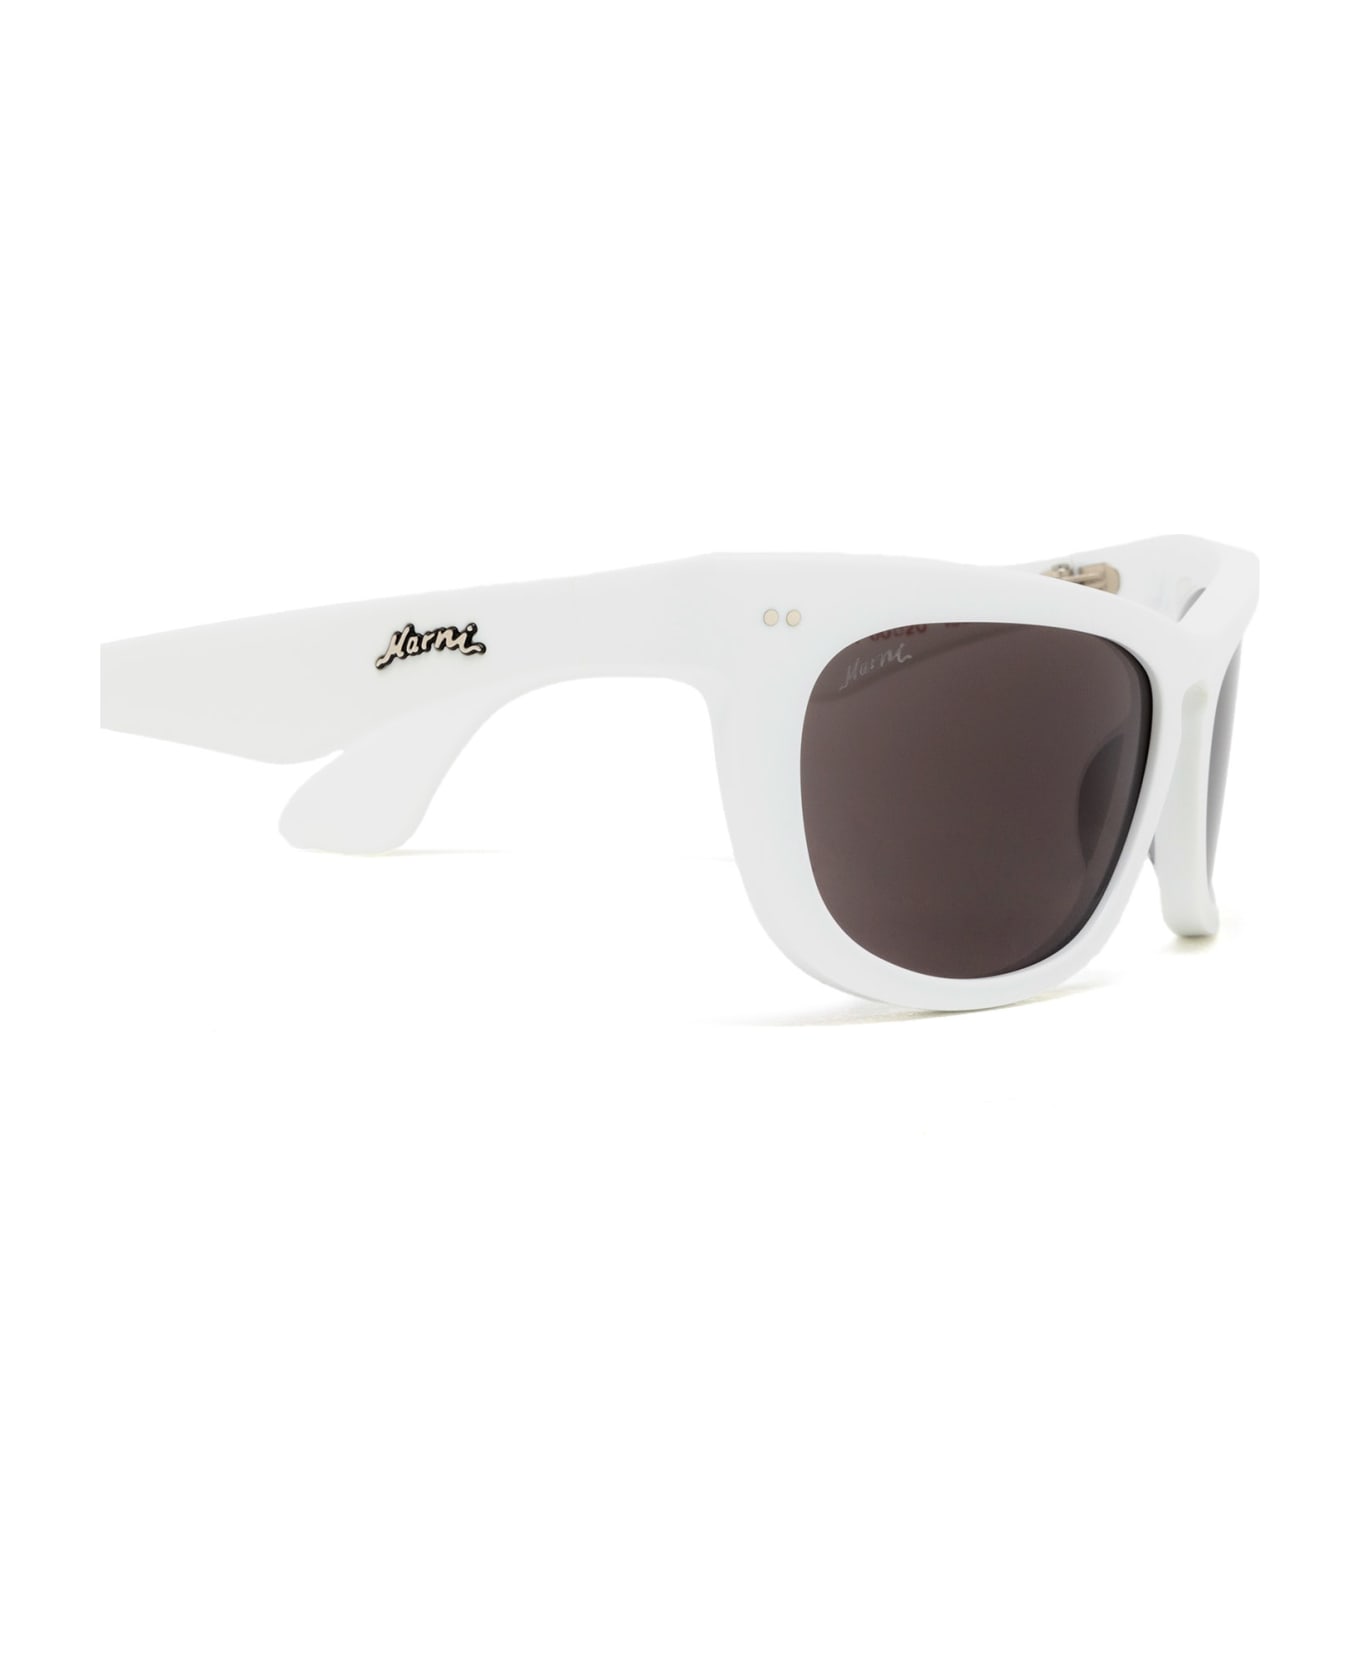 Marni Eyewear Isamu Solid White Sunglasses - Solid White